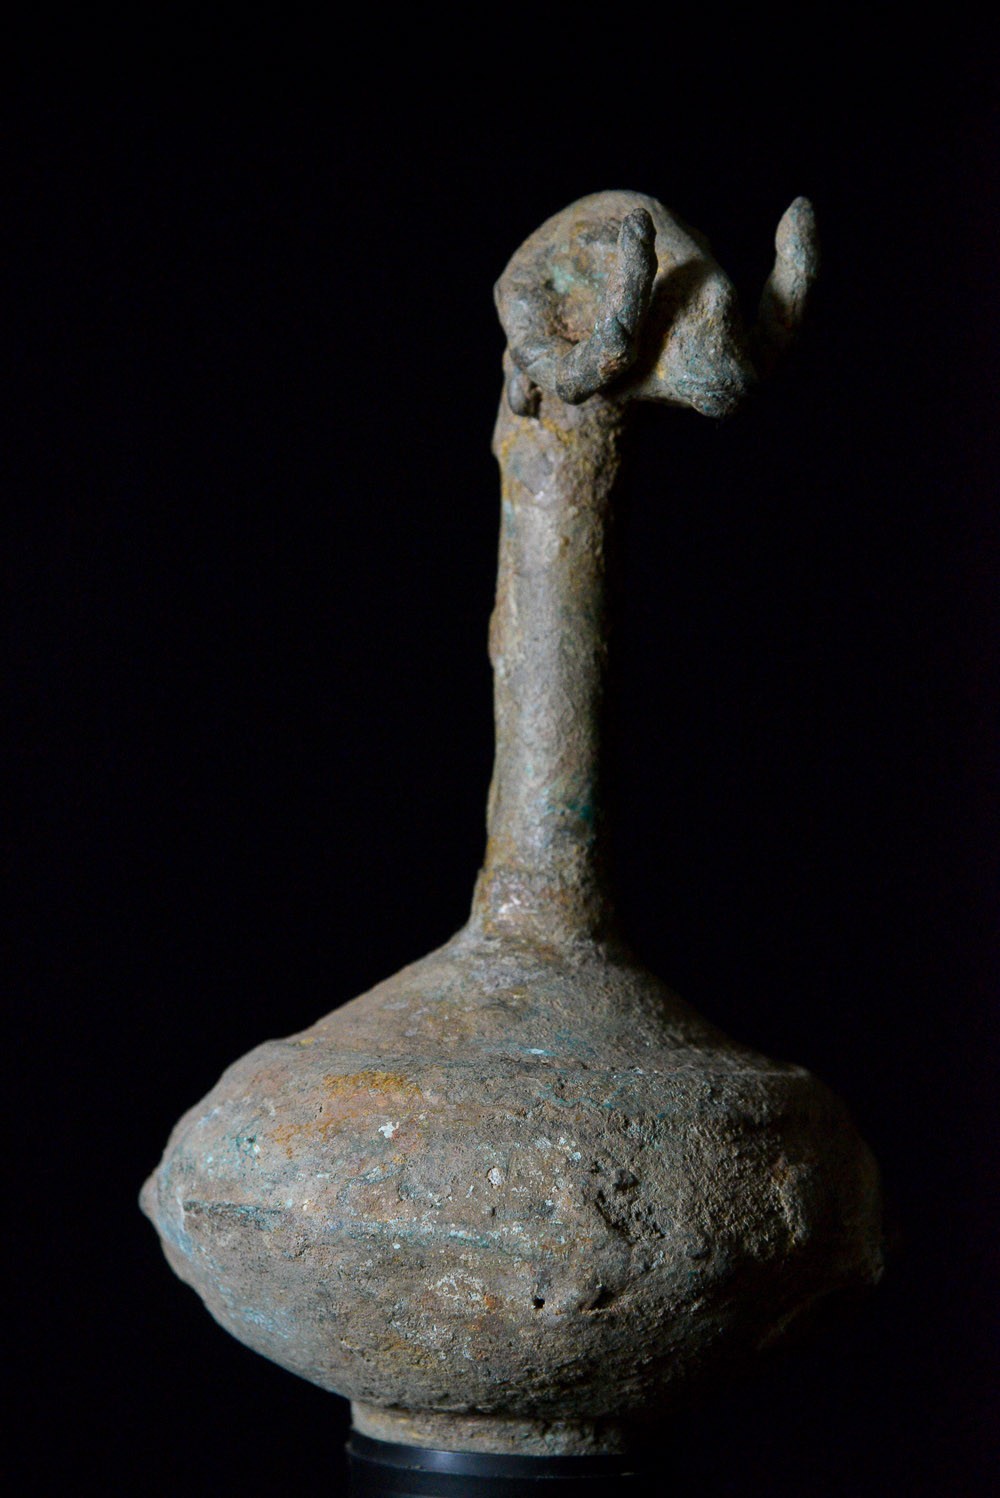 Vase d'autel zoomorphe en bronze - Dogon - Mali